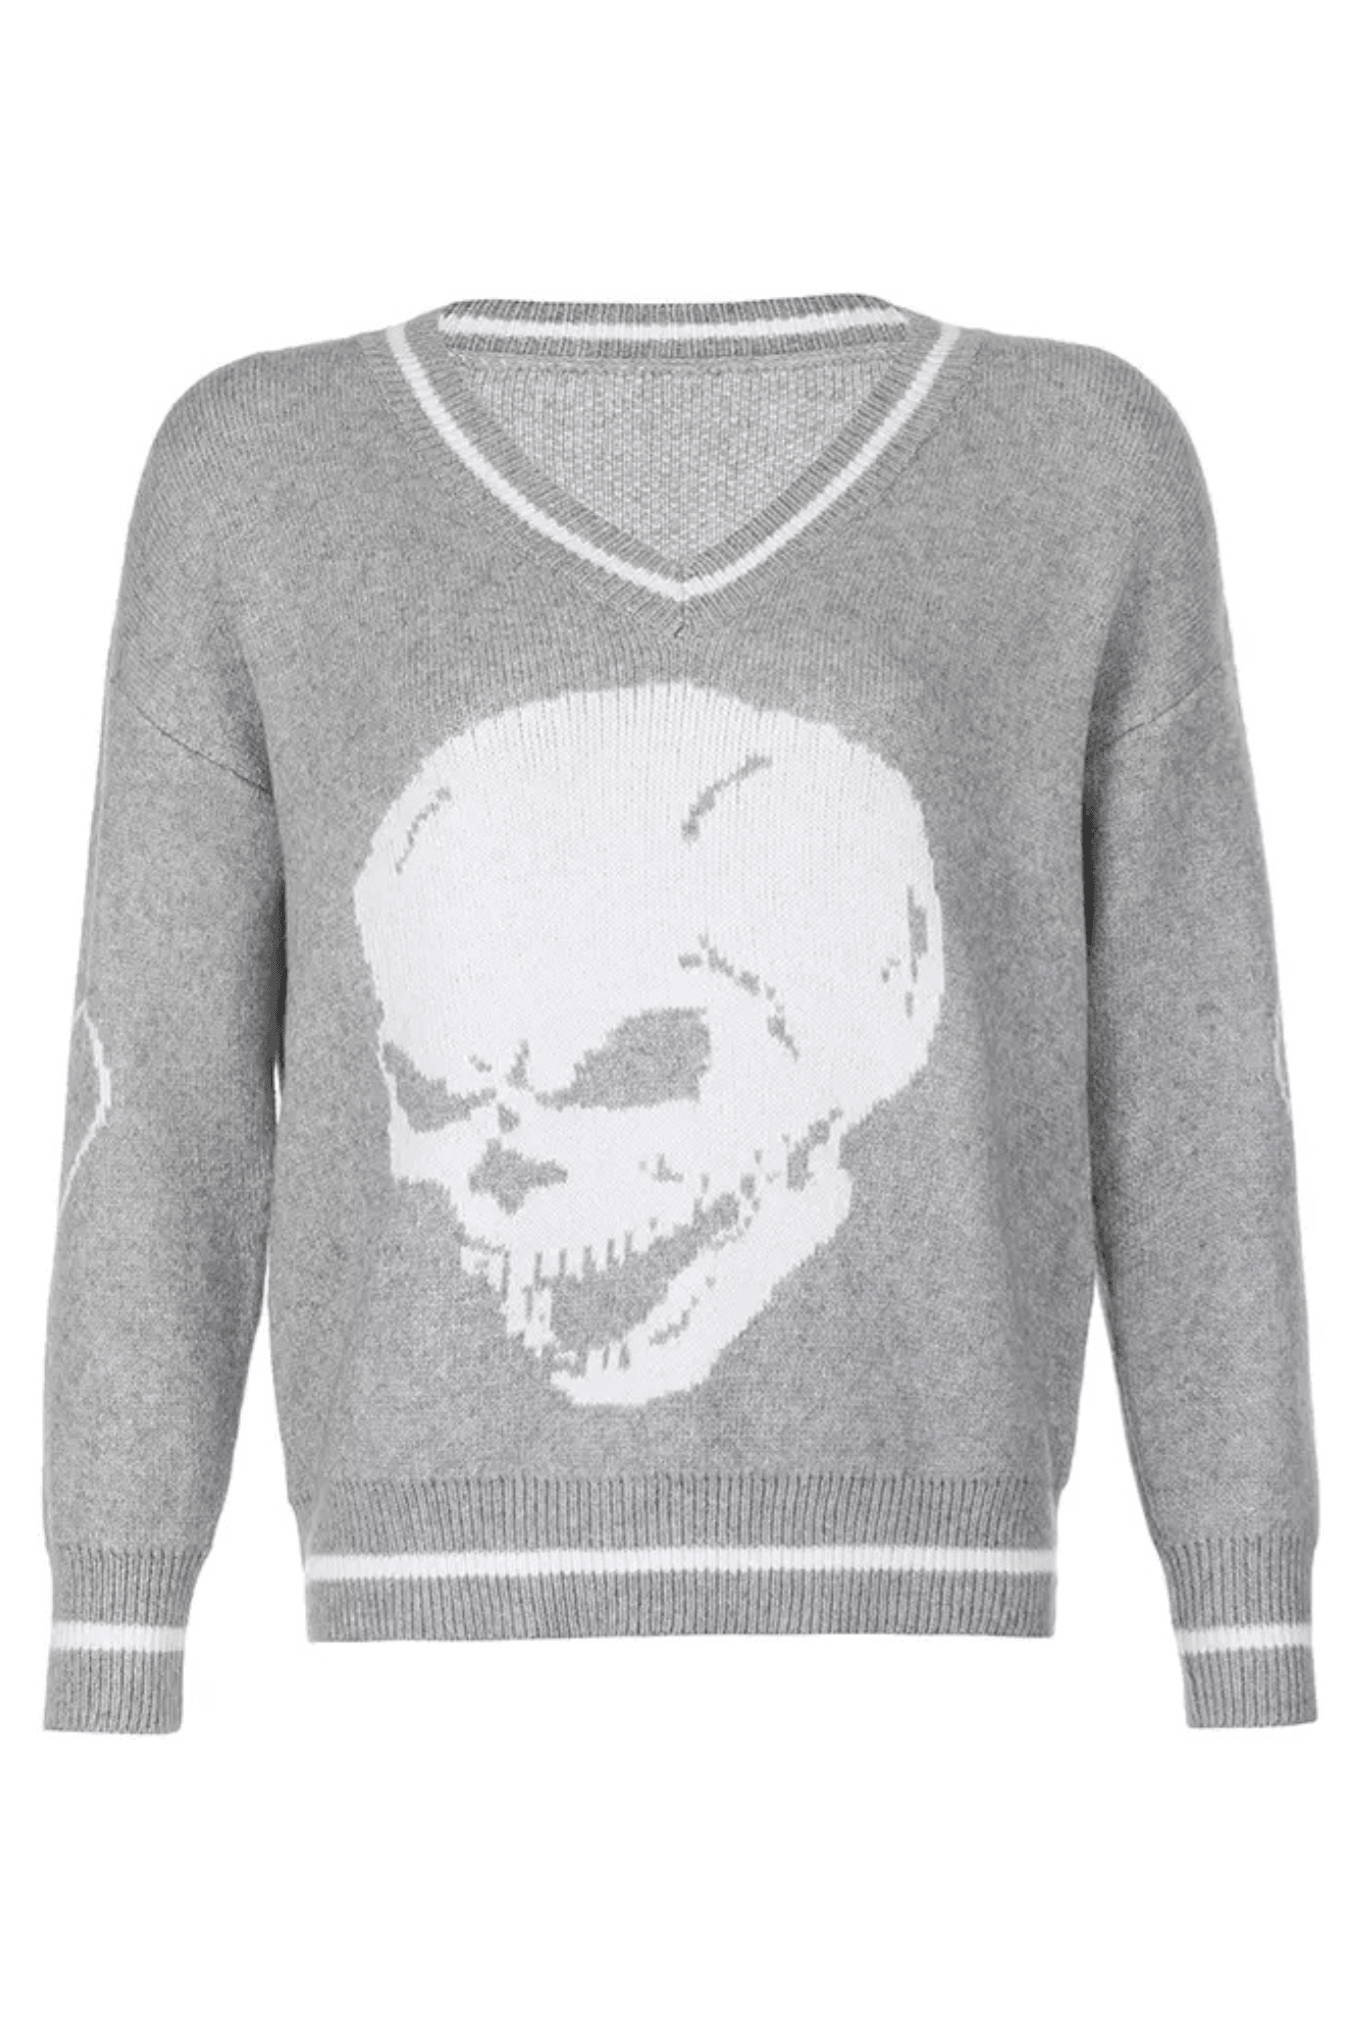 Skeleton Knitted Sweater - shopuntitled.co